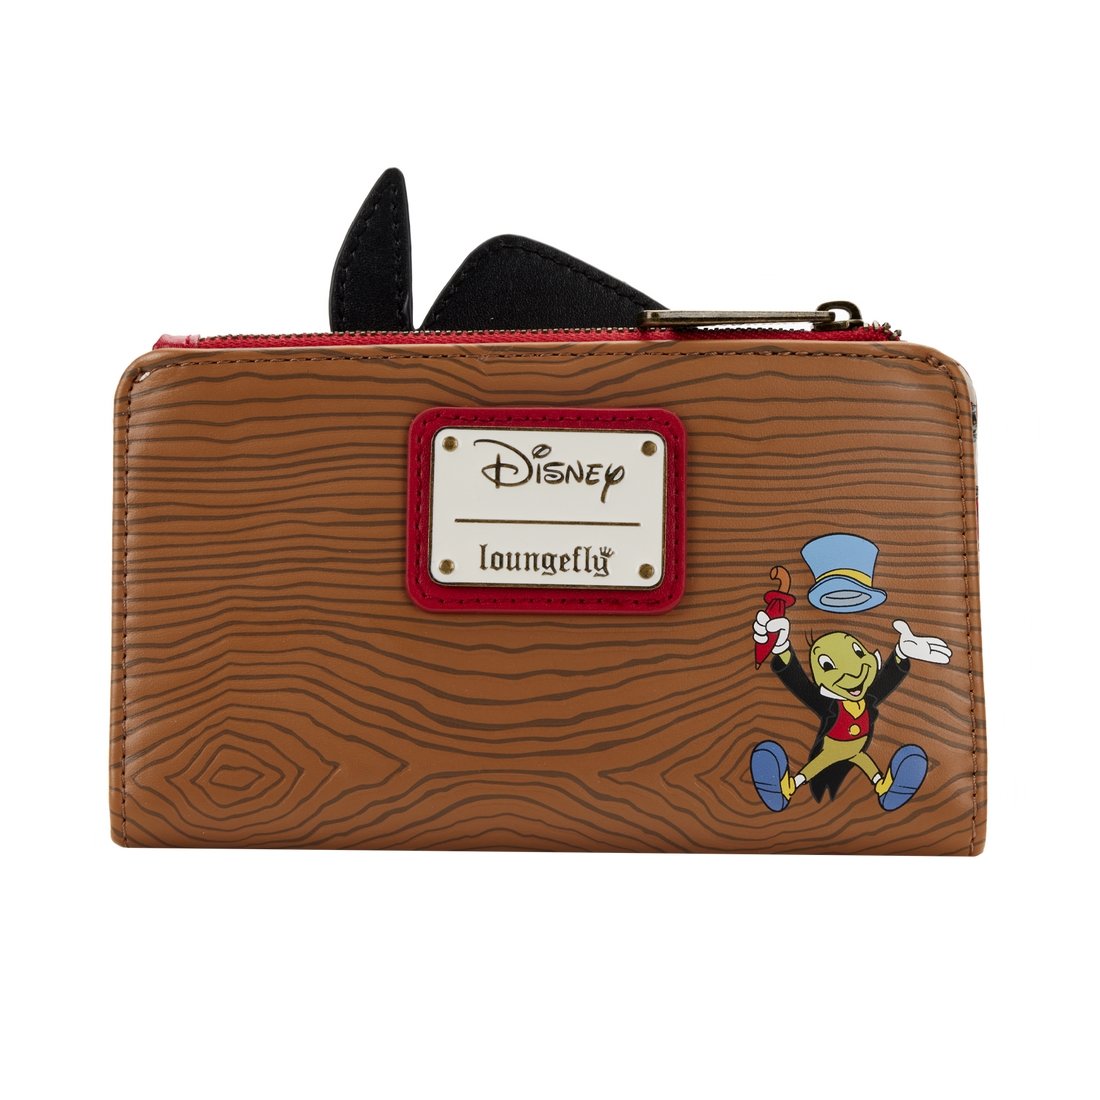 Pinocchio Peeking Wallet - Rockamilly-Bags & Purses-Vintage